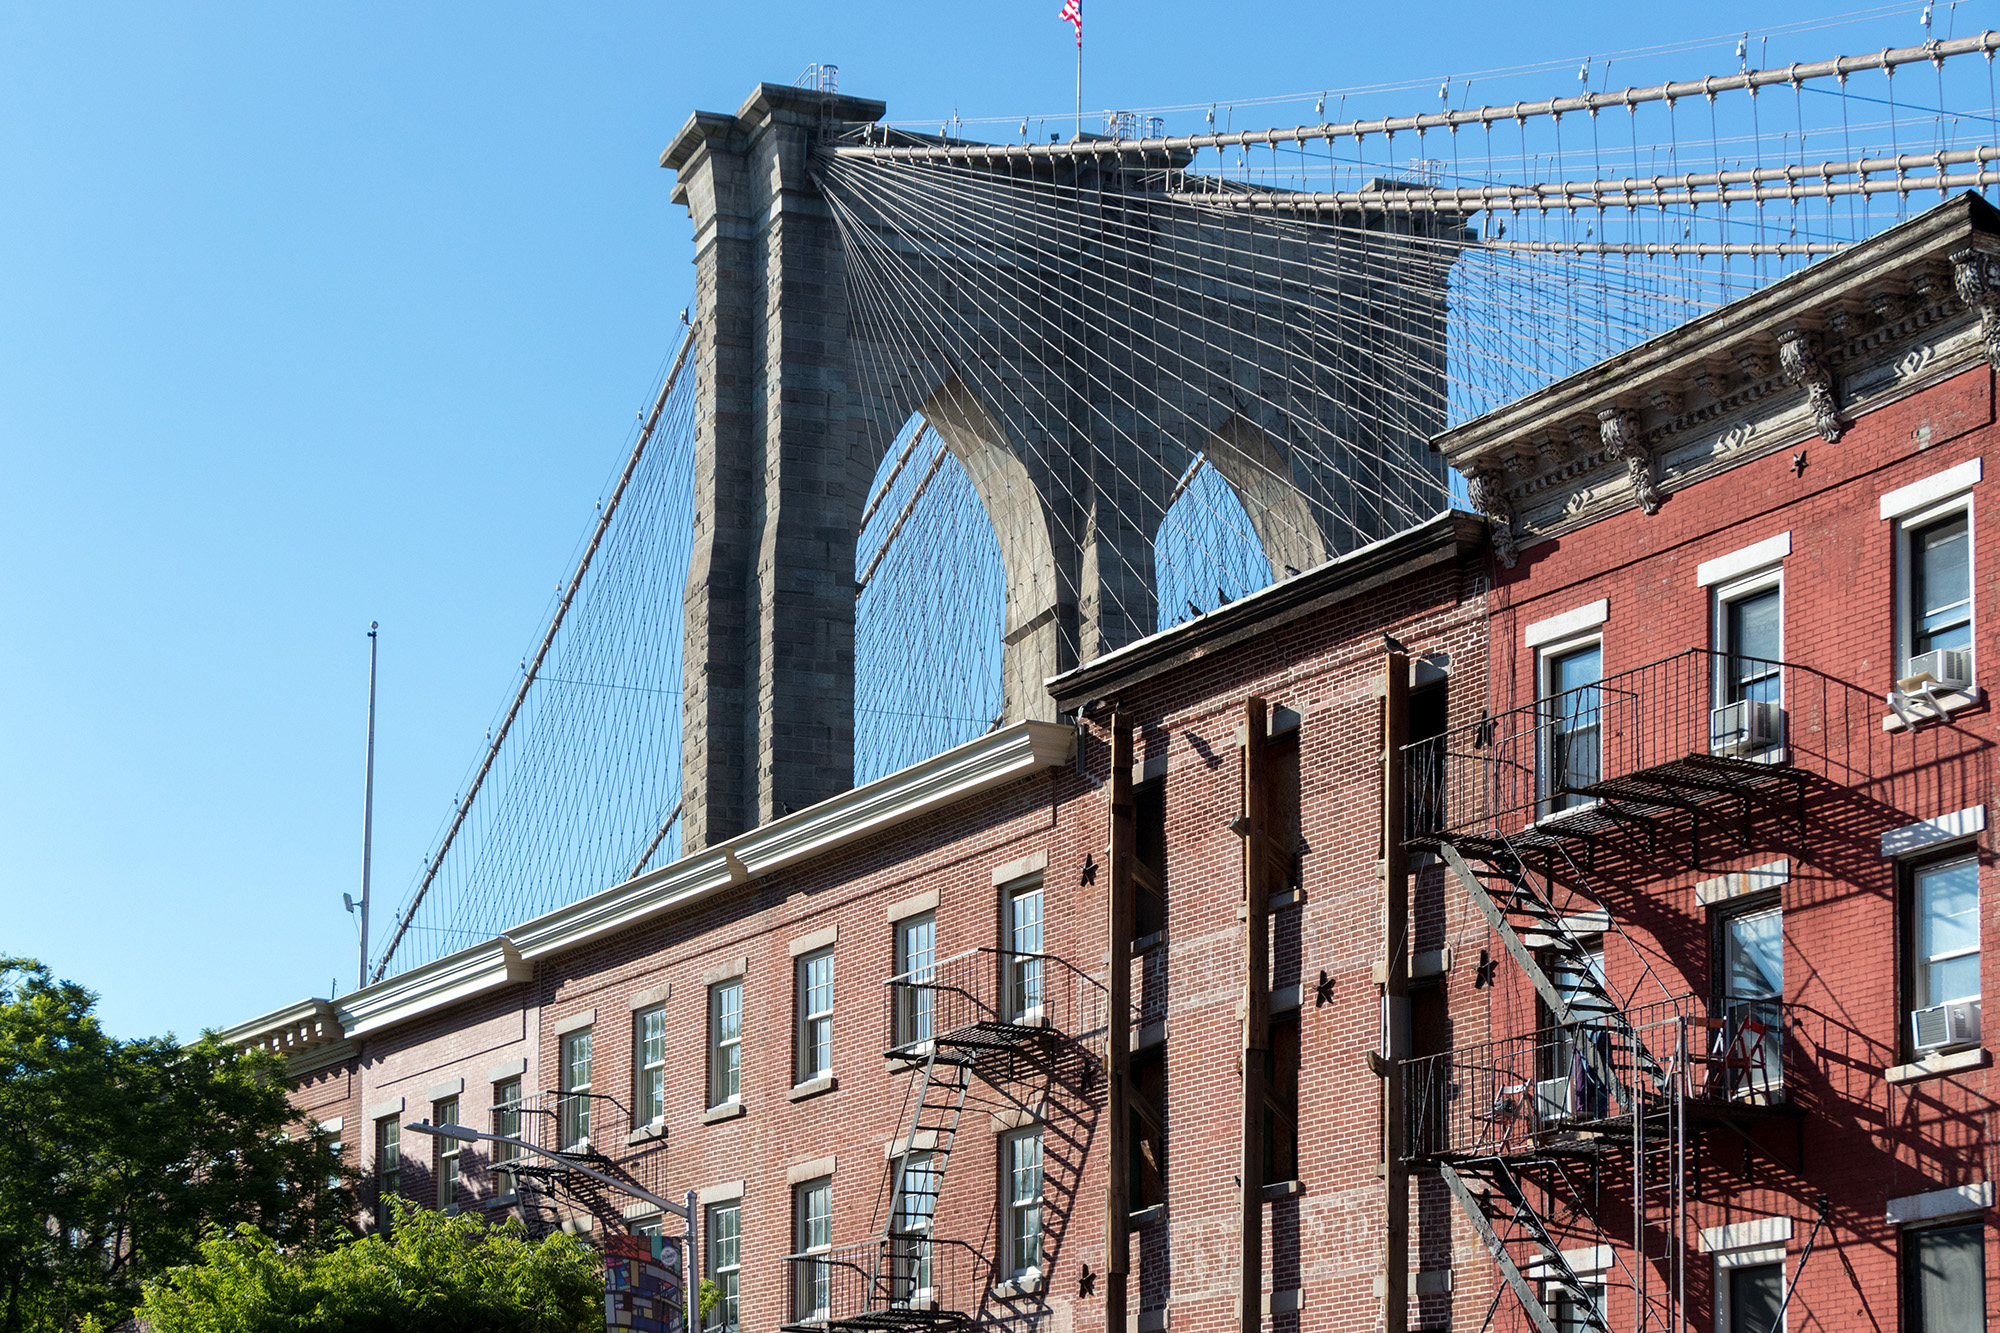 Brooklyn Bridge arching over historic brick facades in Brooklyn